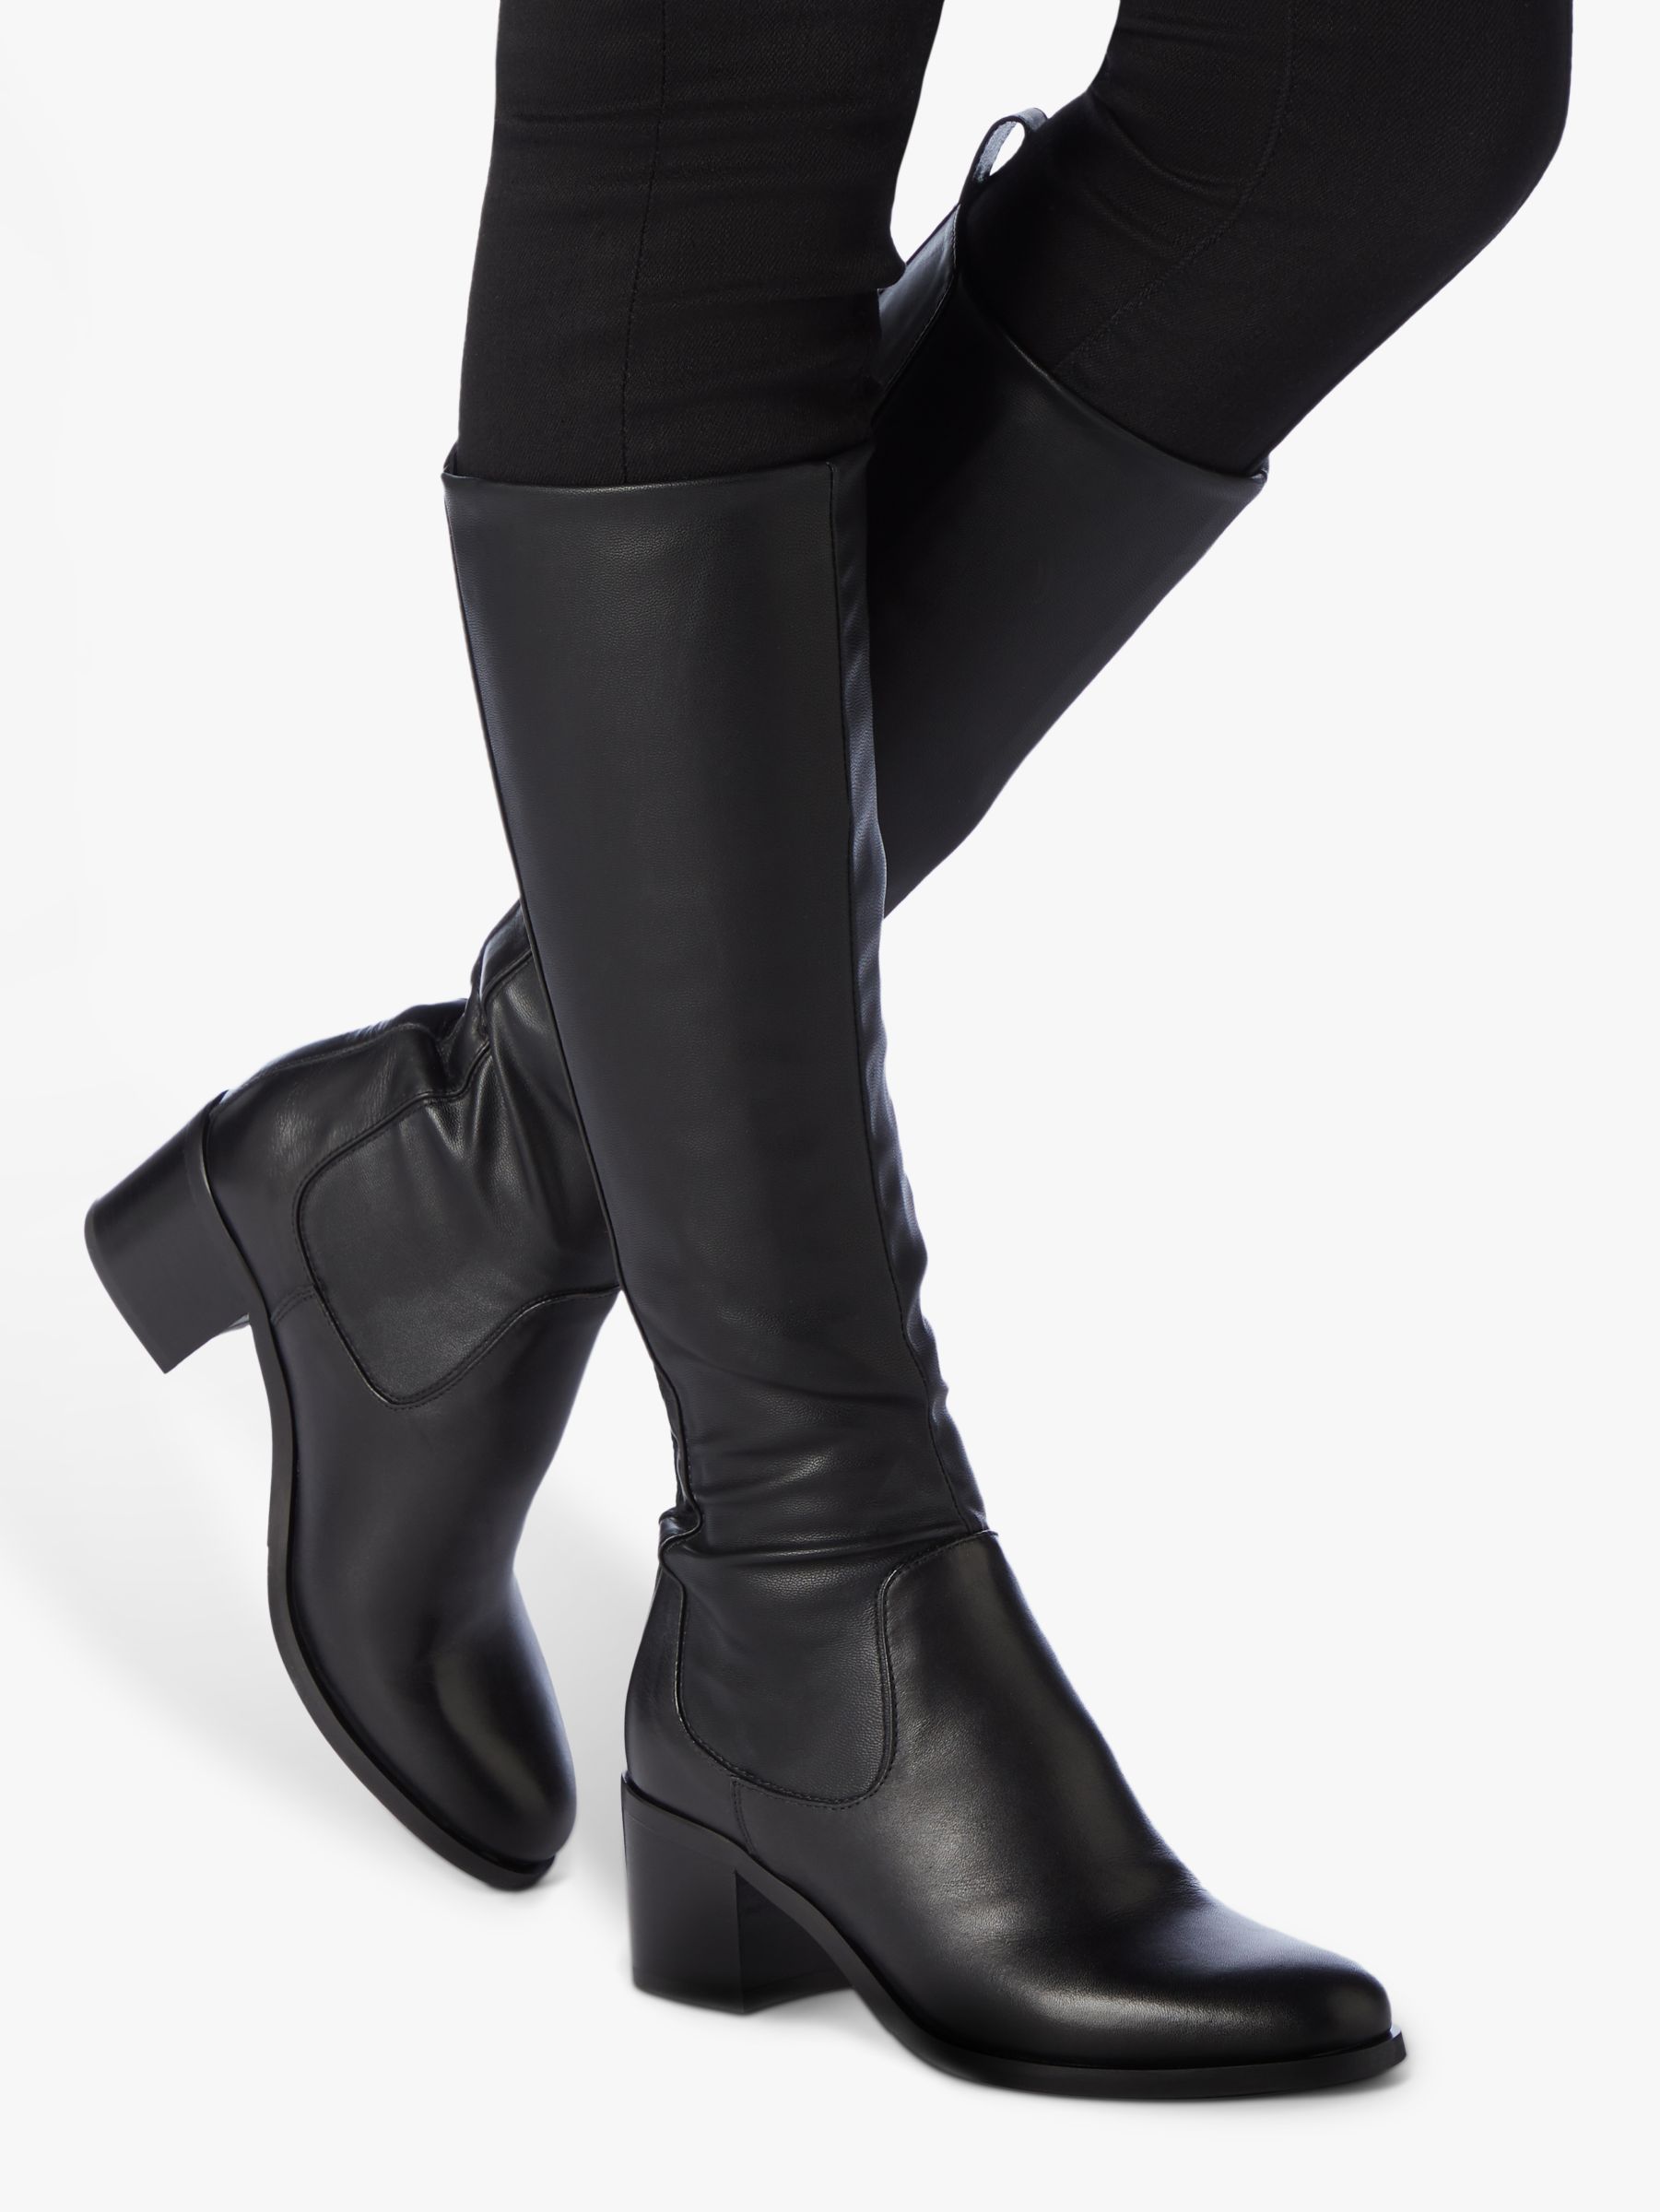 long black knee high boots